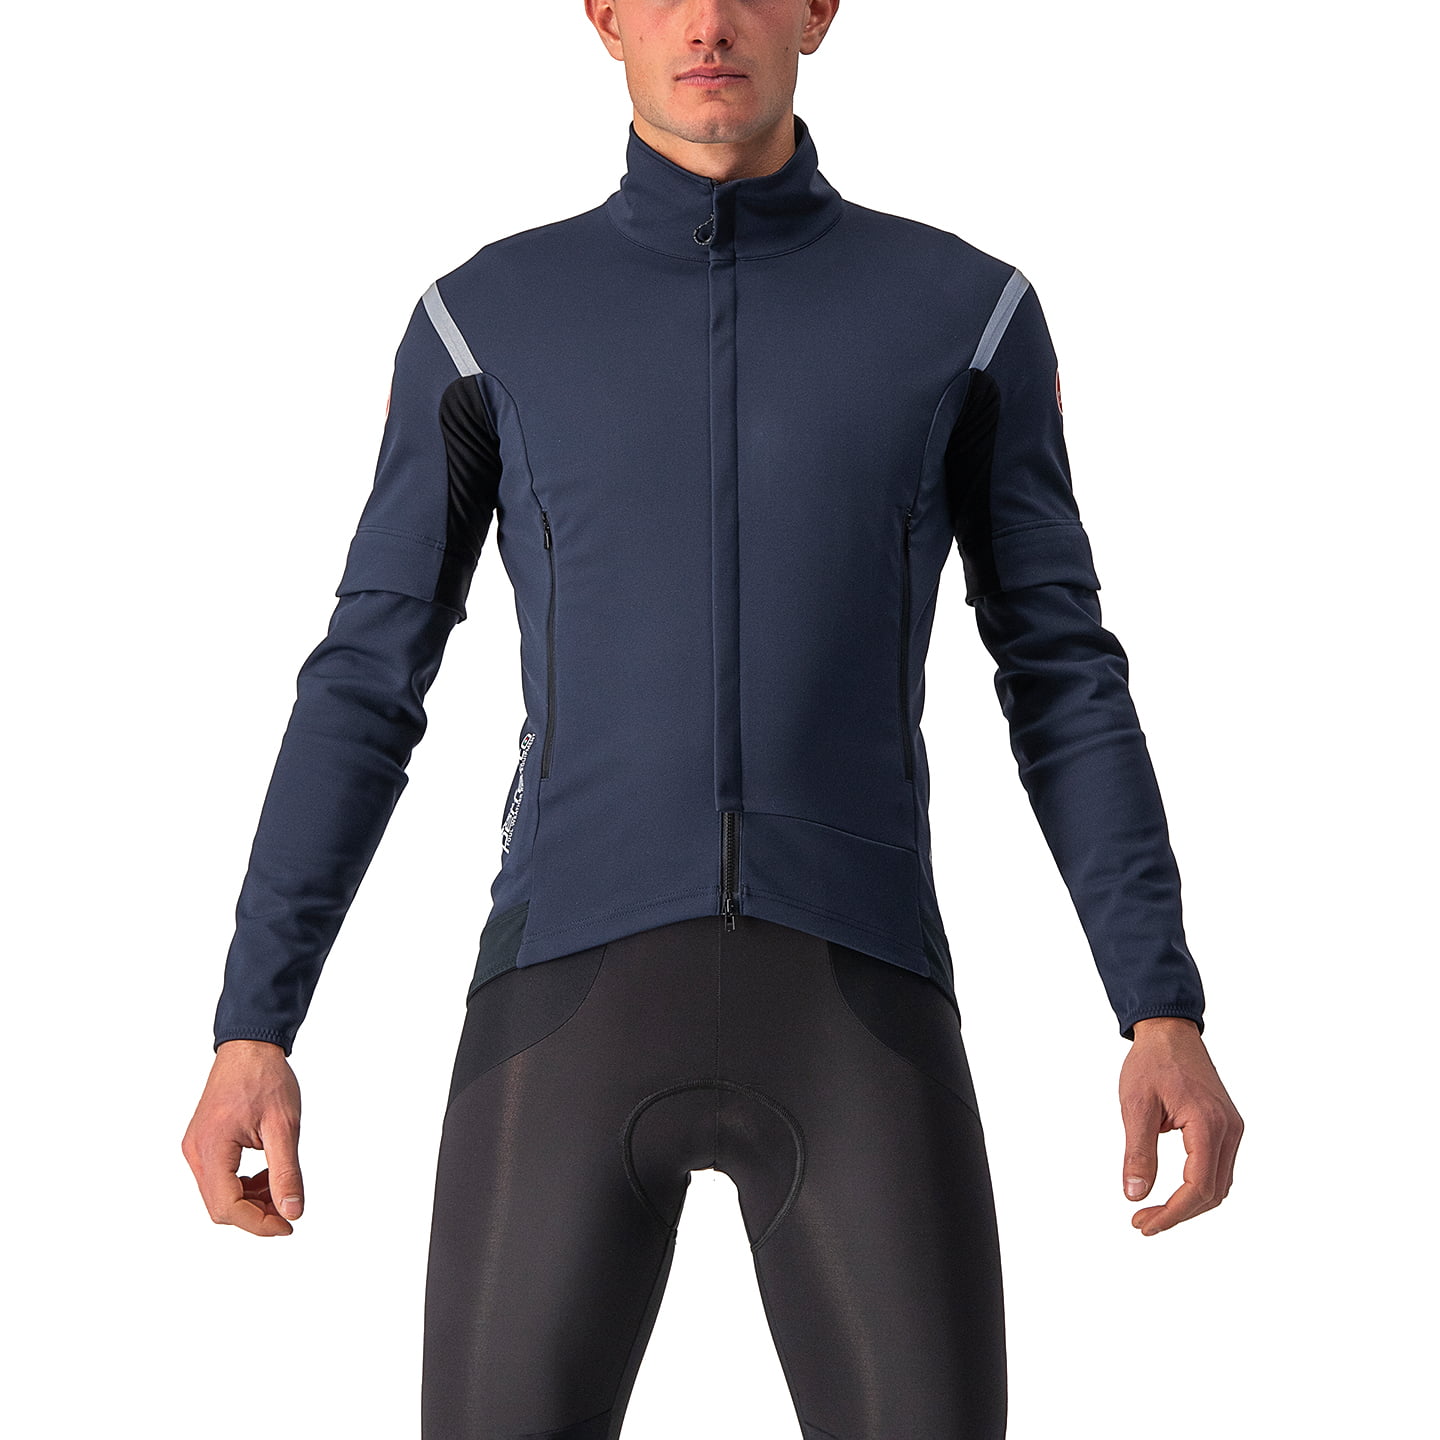 CASTELLI Perfetto RoS 2 Convertible Light Jacket Light Jacket, for men, size M, Bike jacket, Cycling clothing